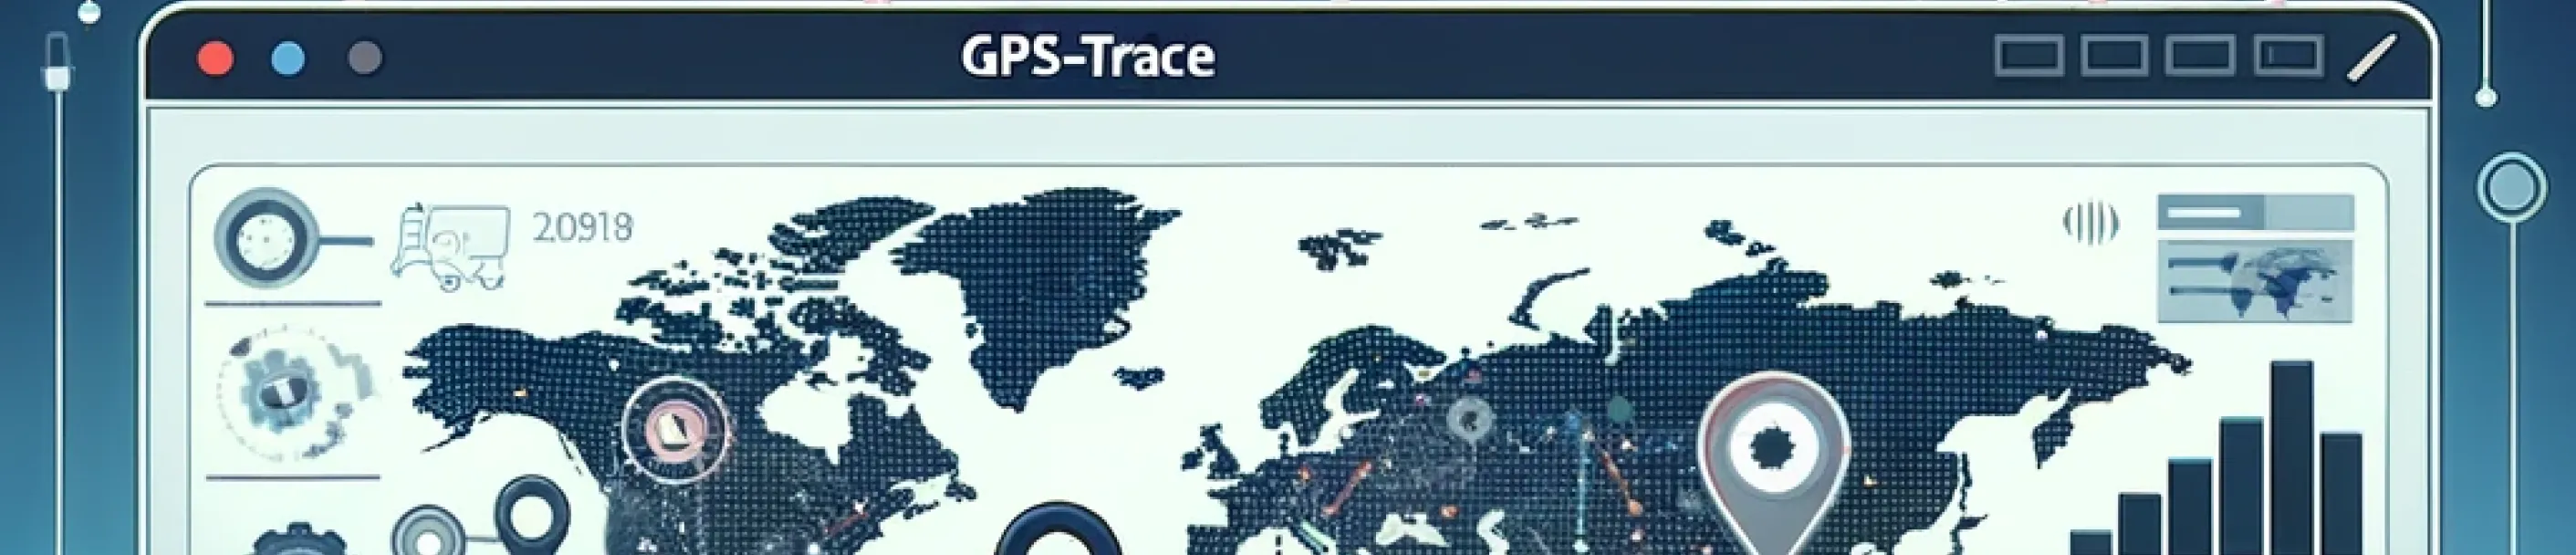 GPS-Trace-partnernetwerk